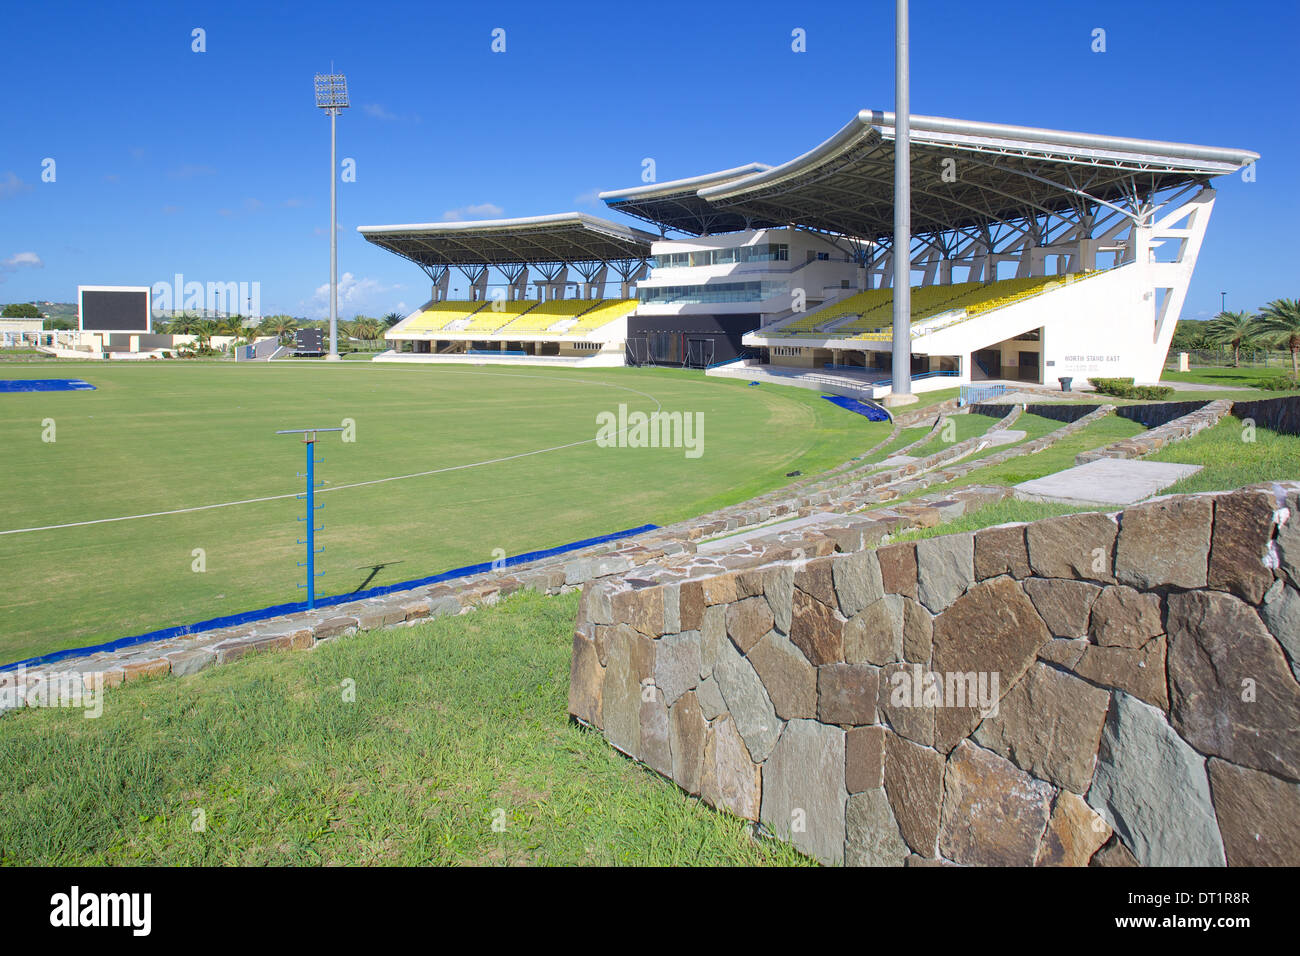 Sir Vivian Richards Stadium, All Saints Road, St. Johns, Antigua, Leeward Islands, West Indies, Caribbean, Central America Stock Photo